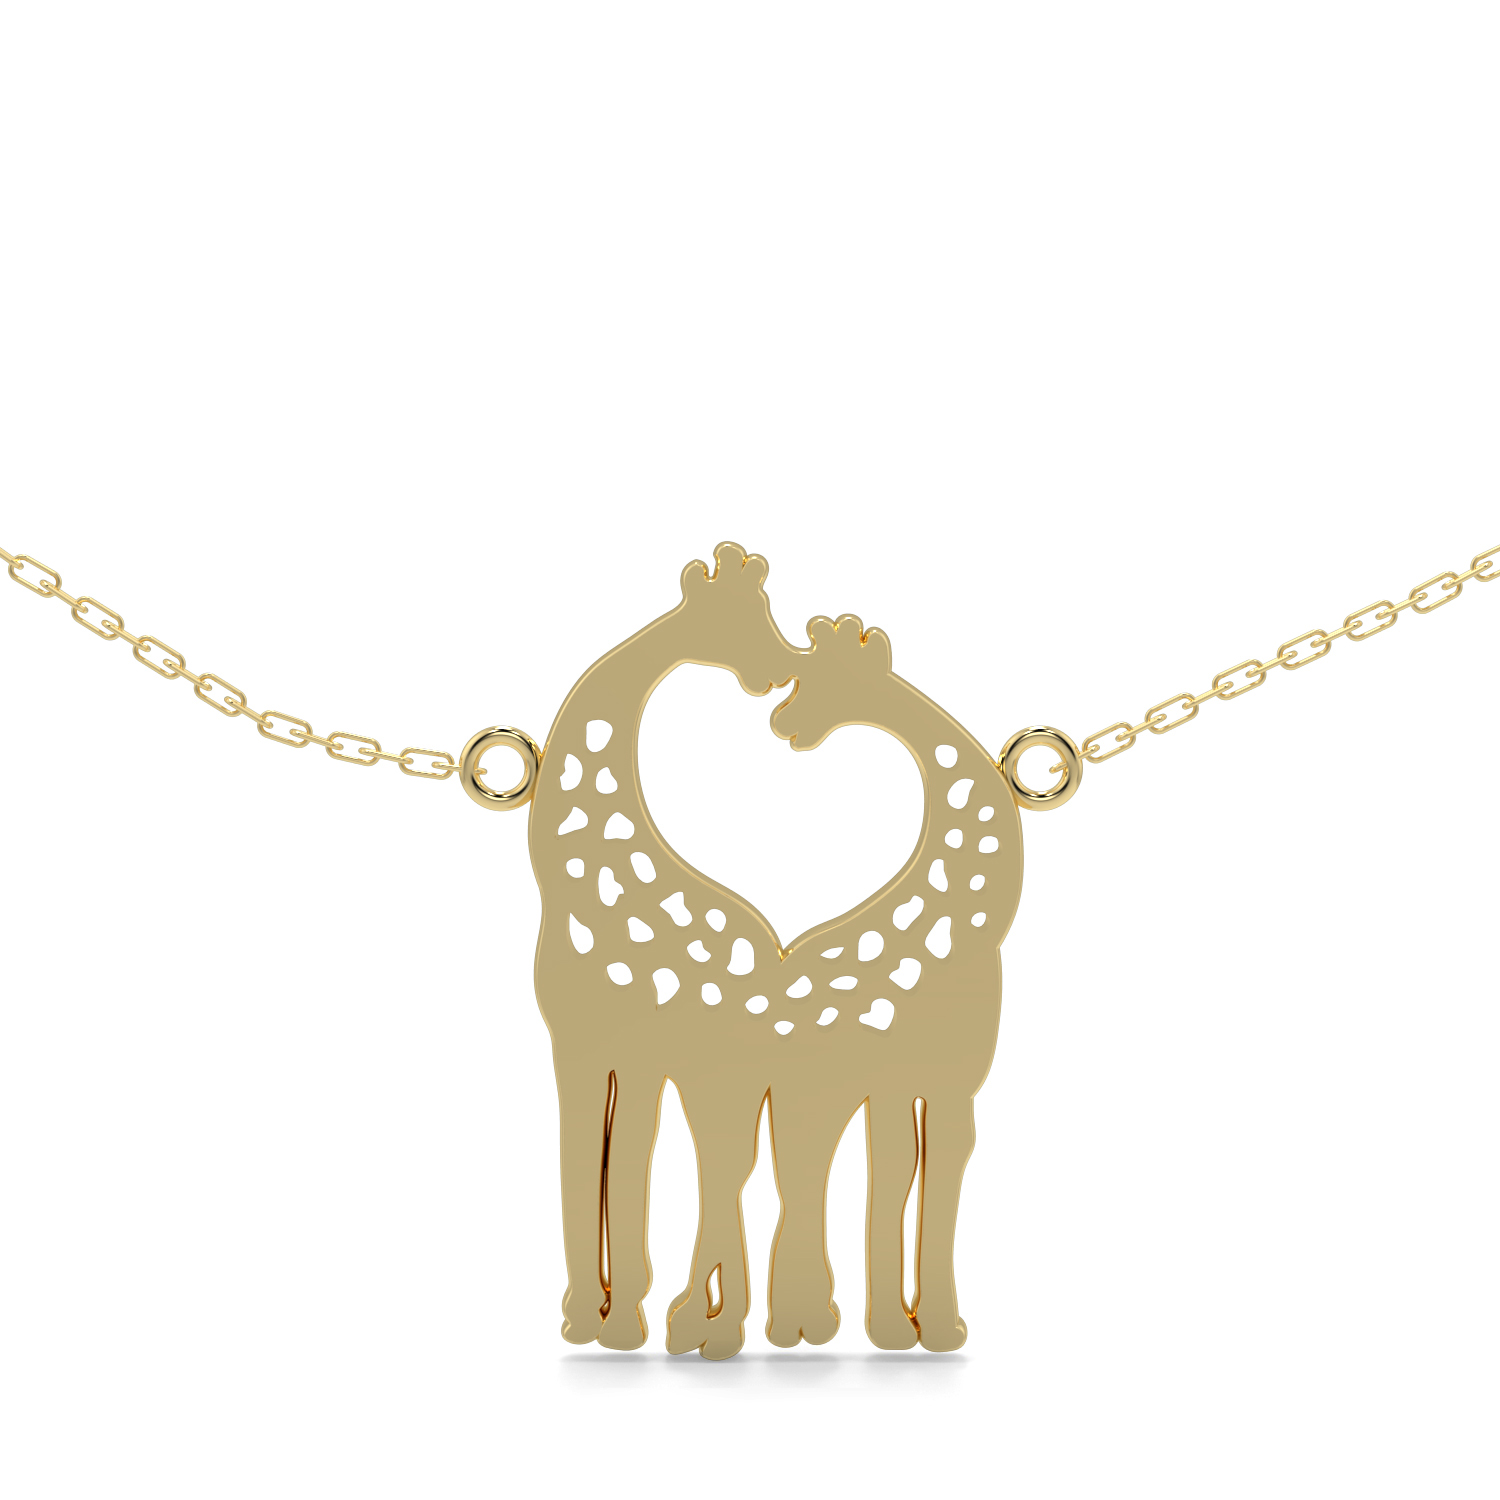 Gold Chain, Giraffe Chain, Light weight Chain